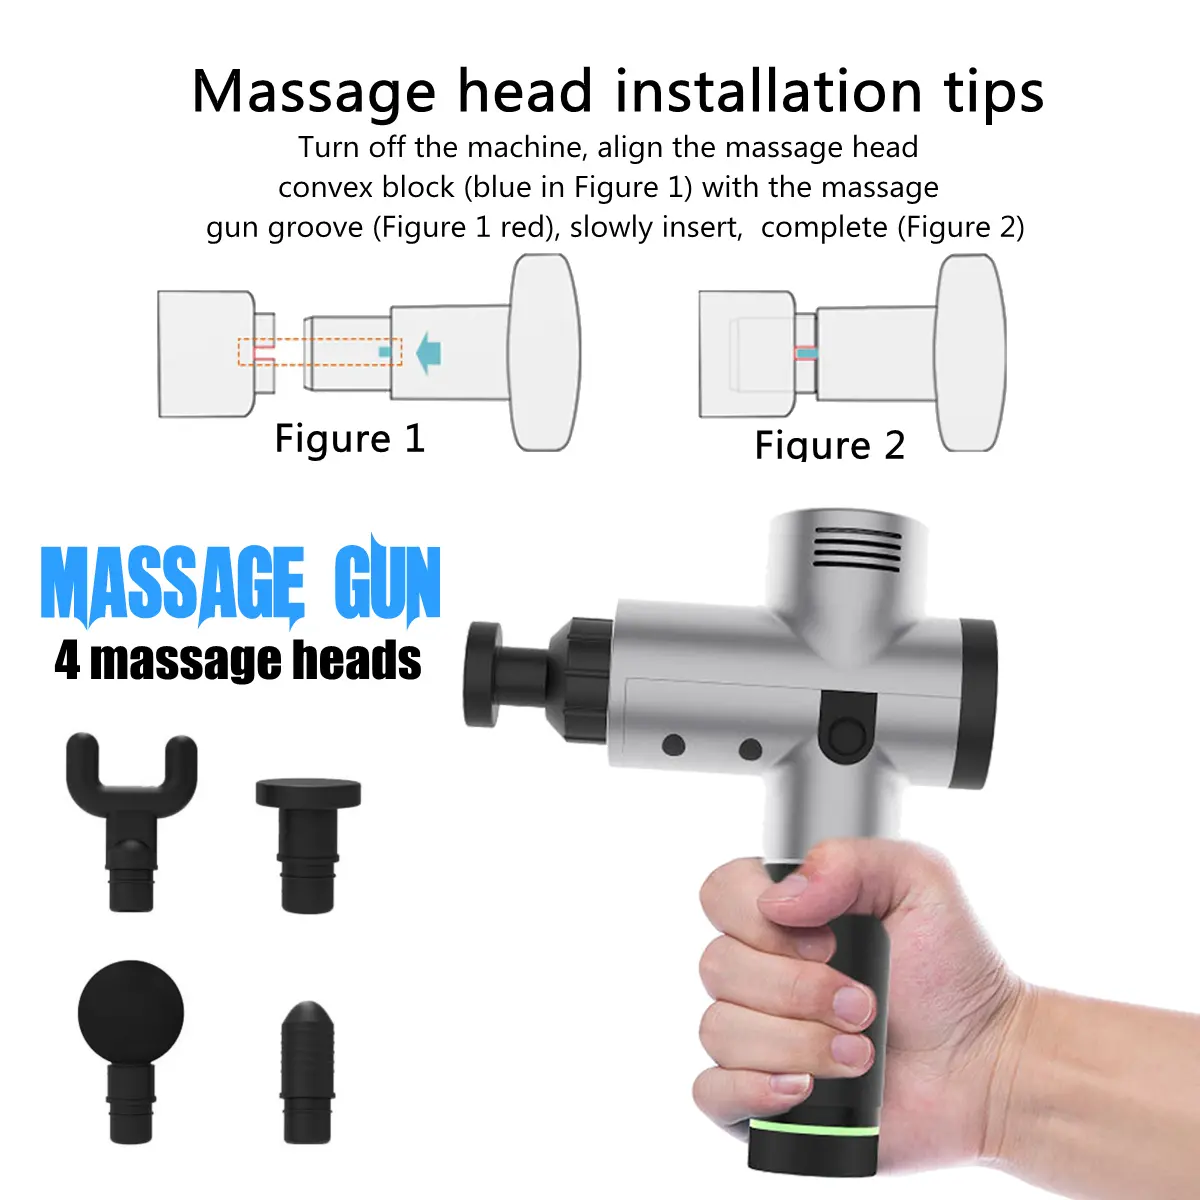 12.6V 2000mAh Massage G un 4 Head 3 Gear Electric Massager Quiet Technology Professional Deep Tissue Massager for Muscle Tension Relief